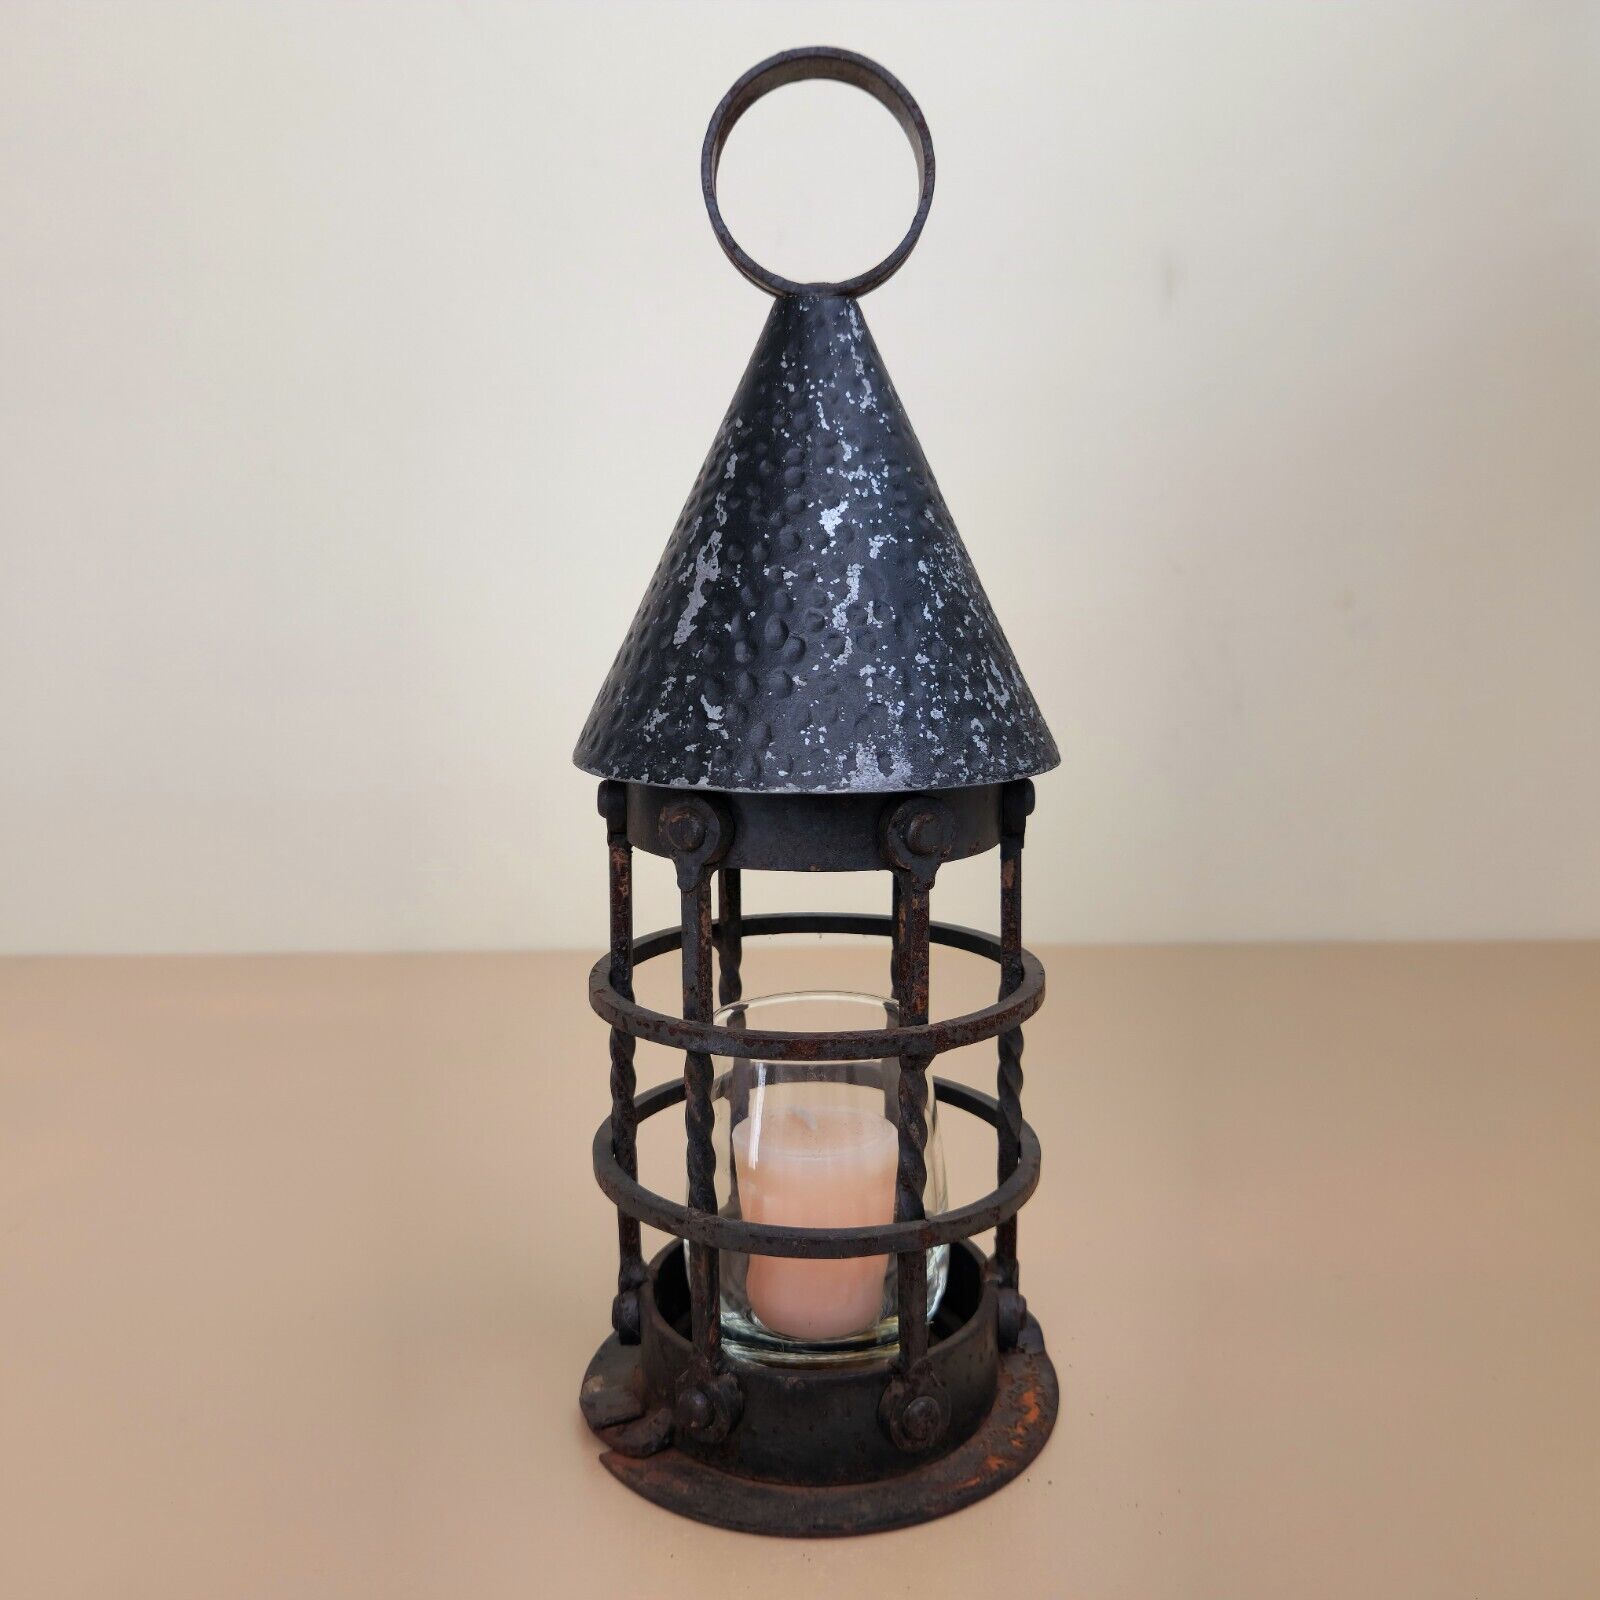 Primitive Rusty Old Antique Vintage Gothic Cast Iron Black Candle Lantern